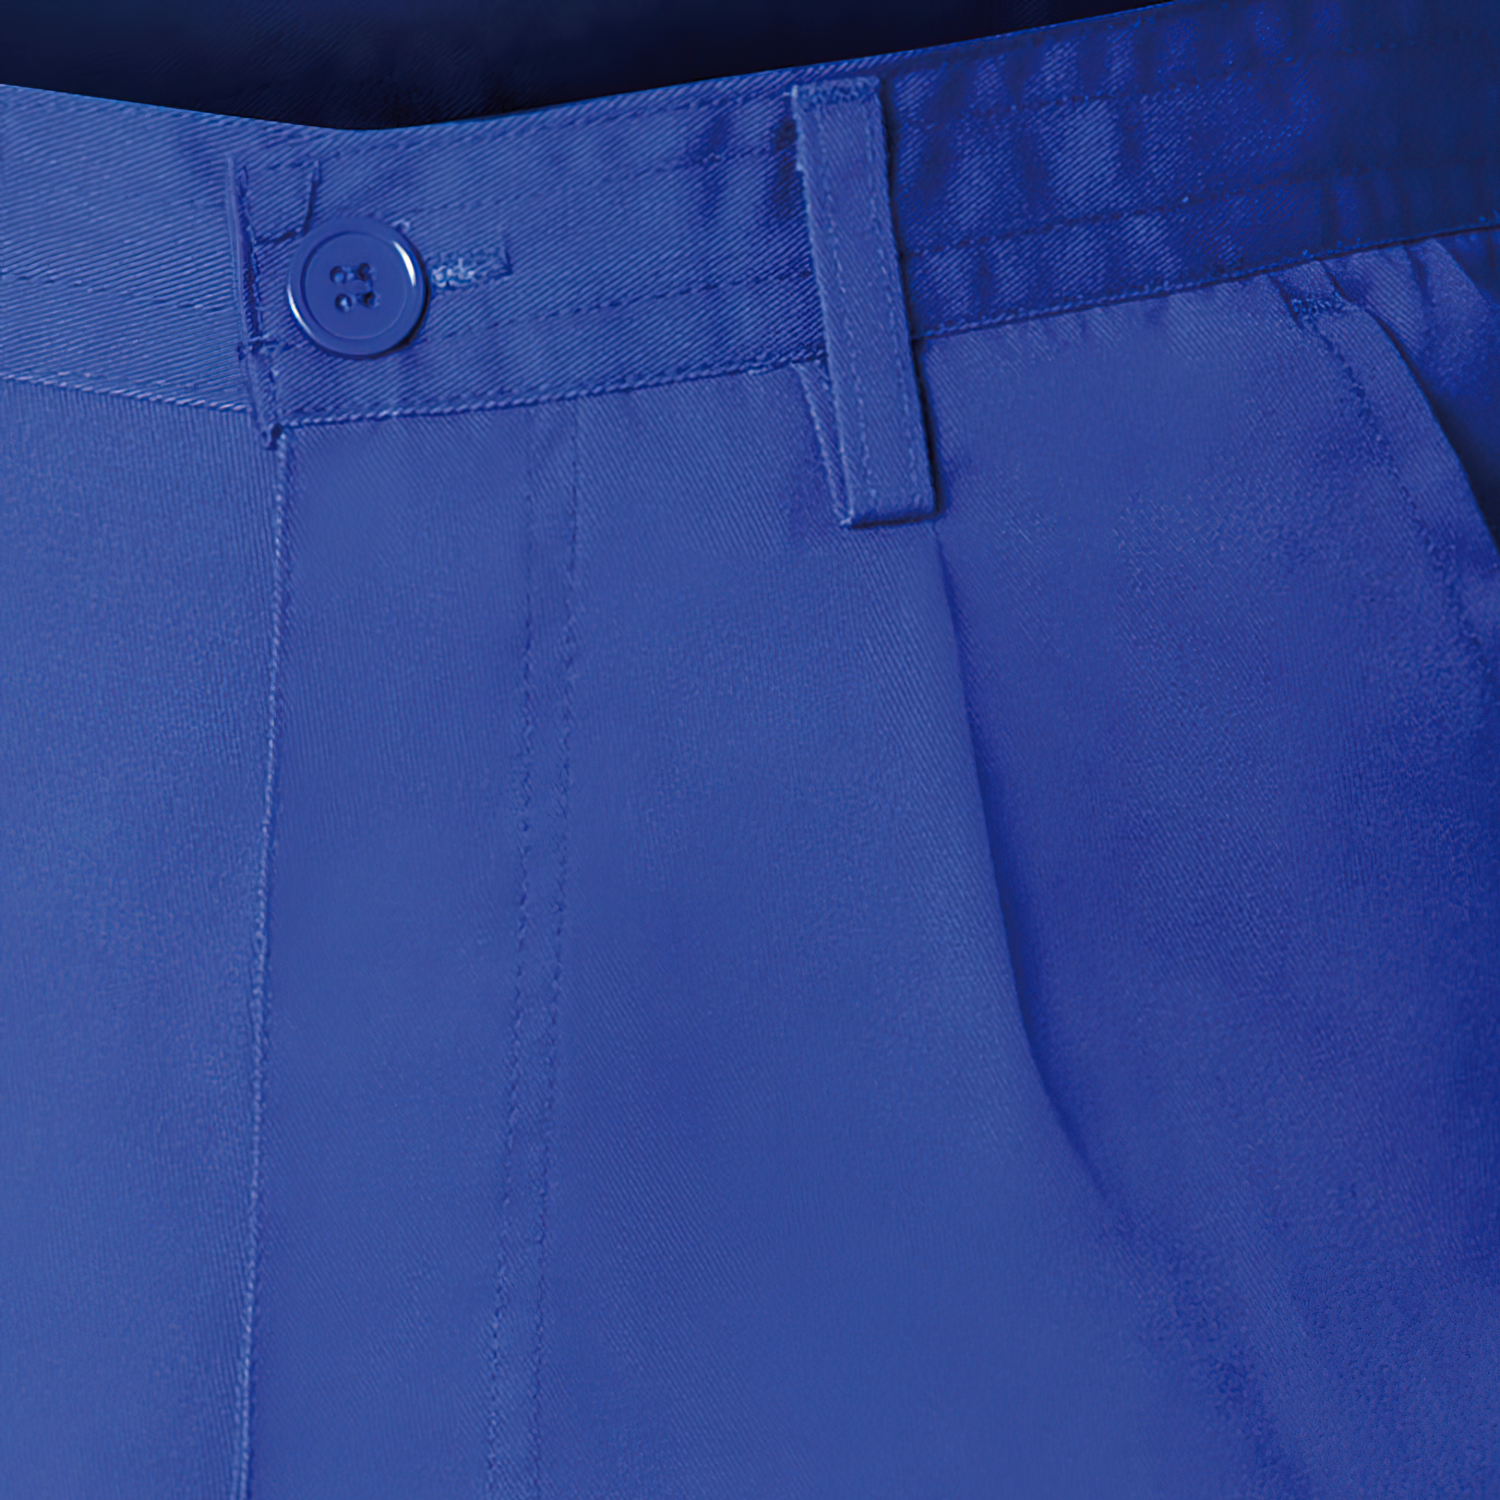 Pantalon de trabajo largo, color azul, multibolsillos, resistente